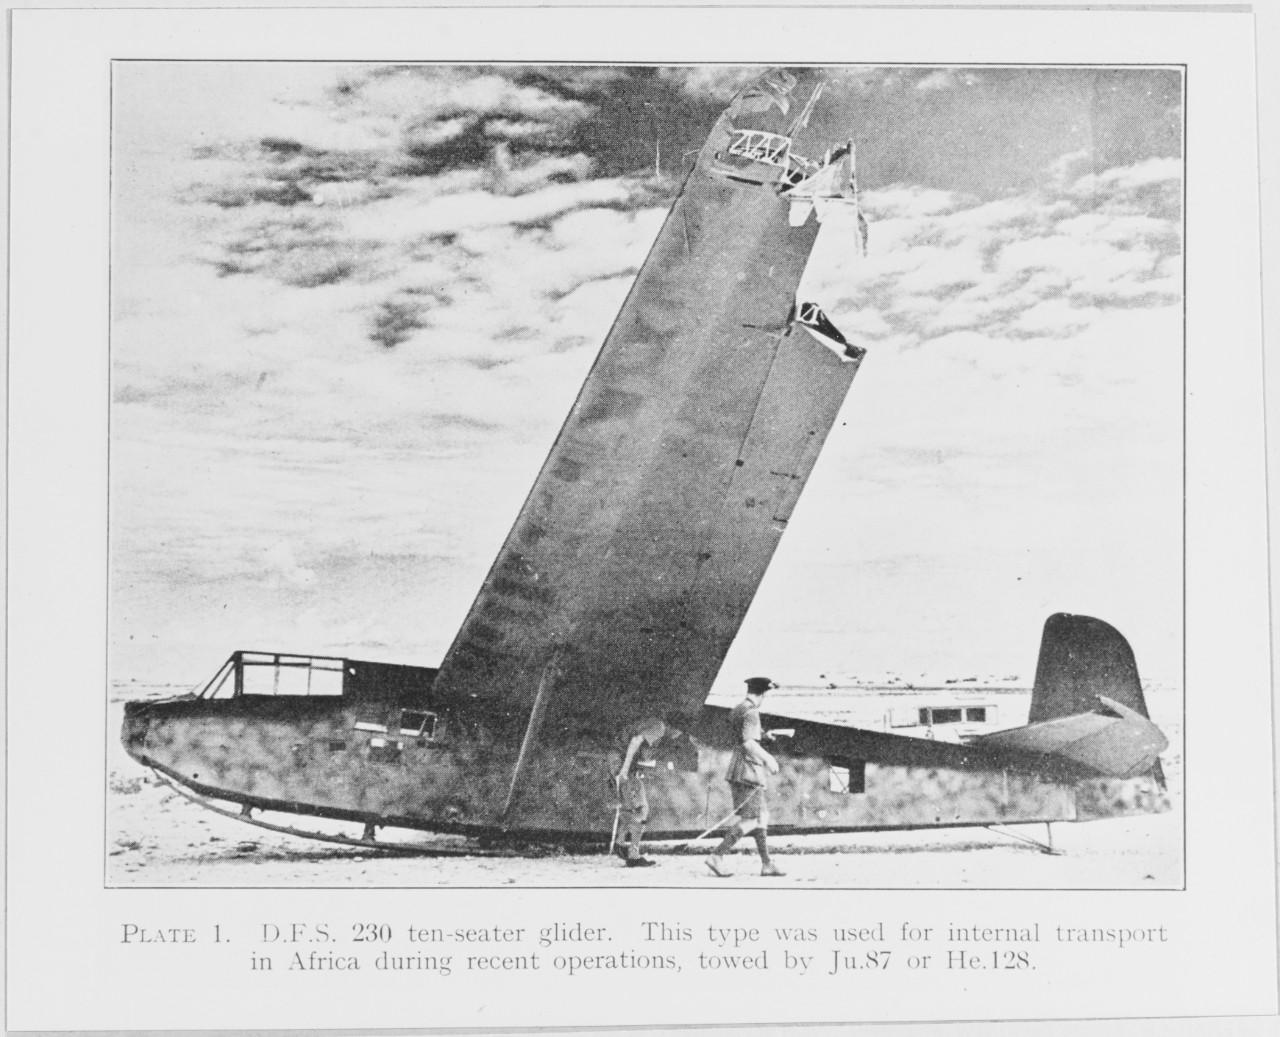 D.F.S. 230 ten-seater glider